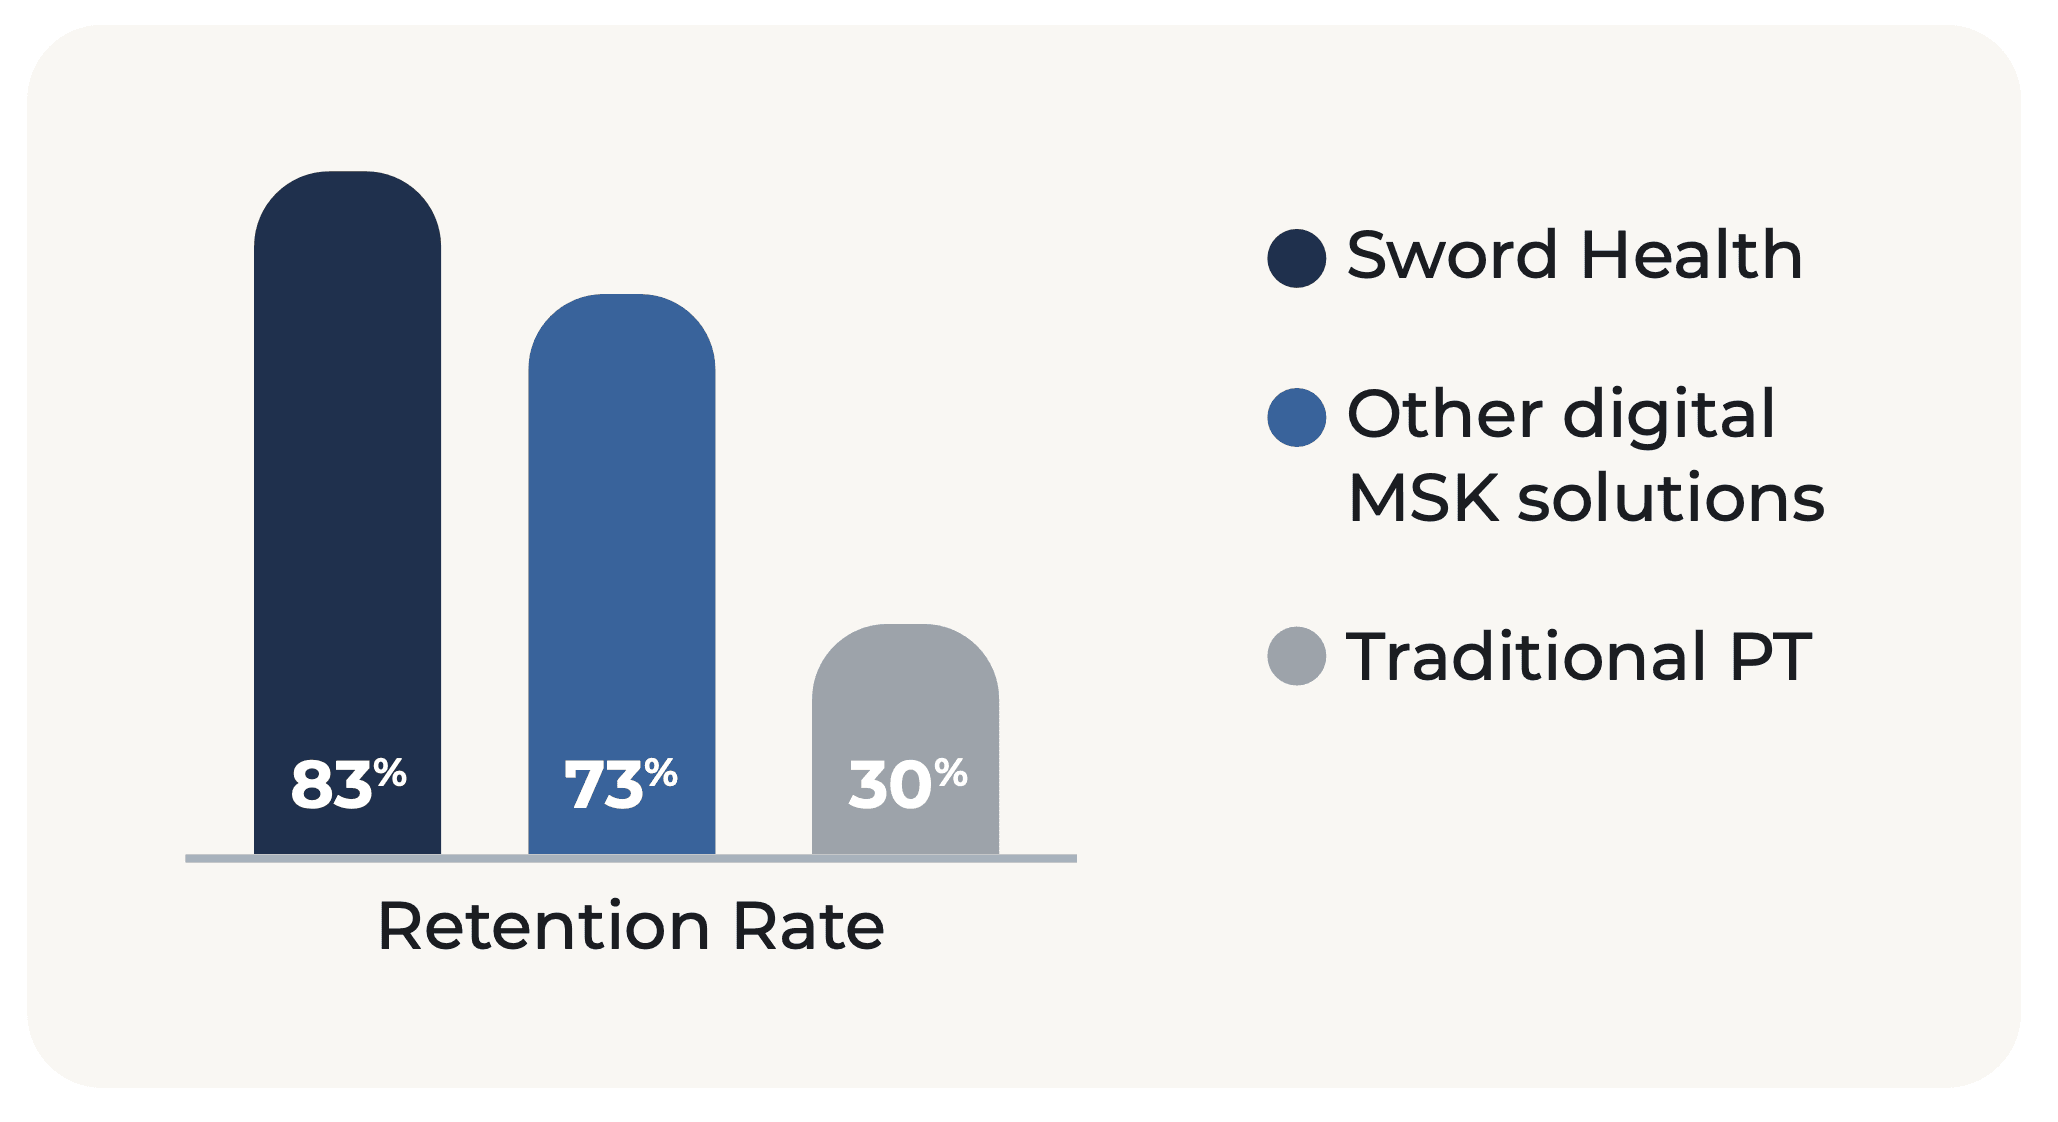 Sword Health achieves 83% retention rate